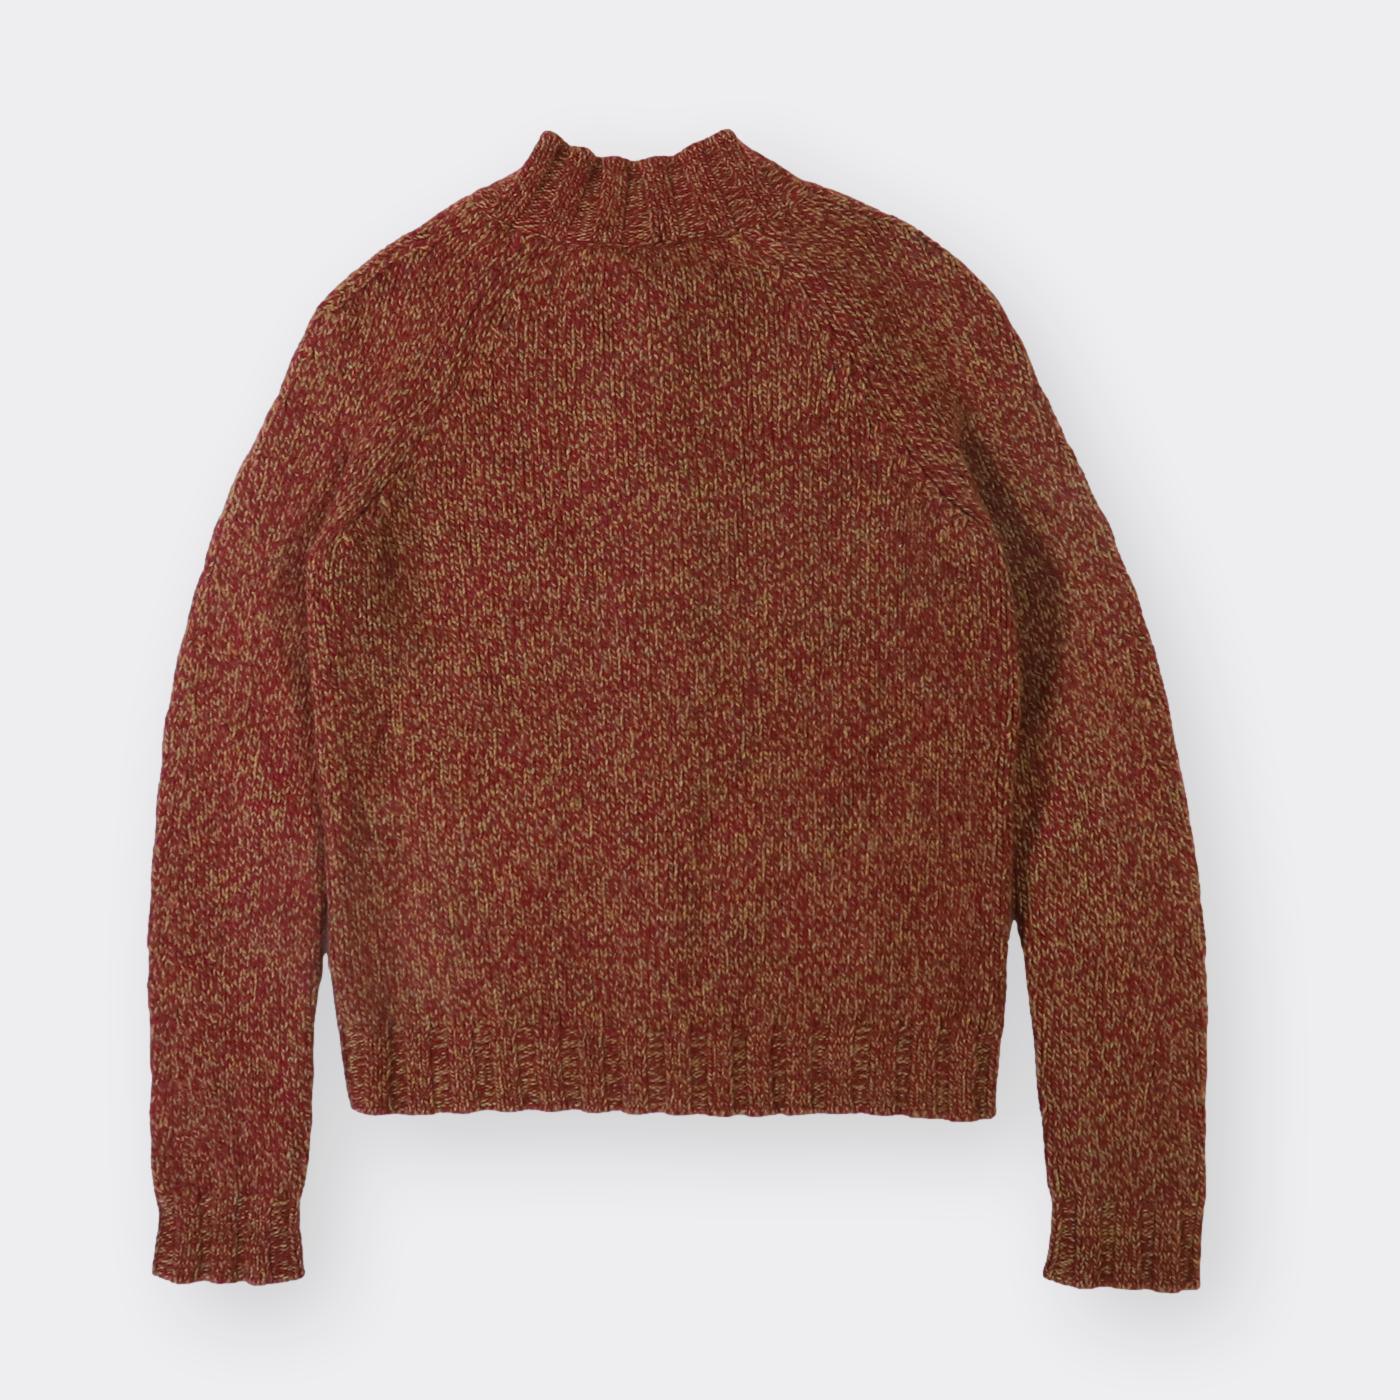 Moschino Vintage Sweater - Medium - Known Source